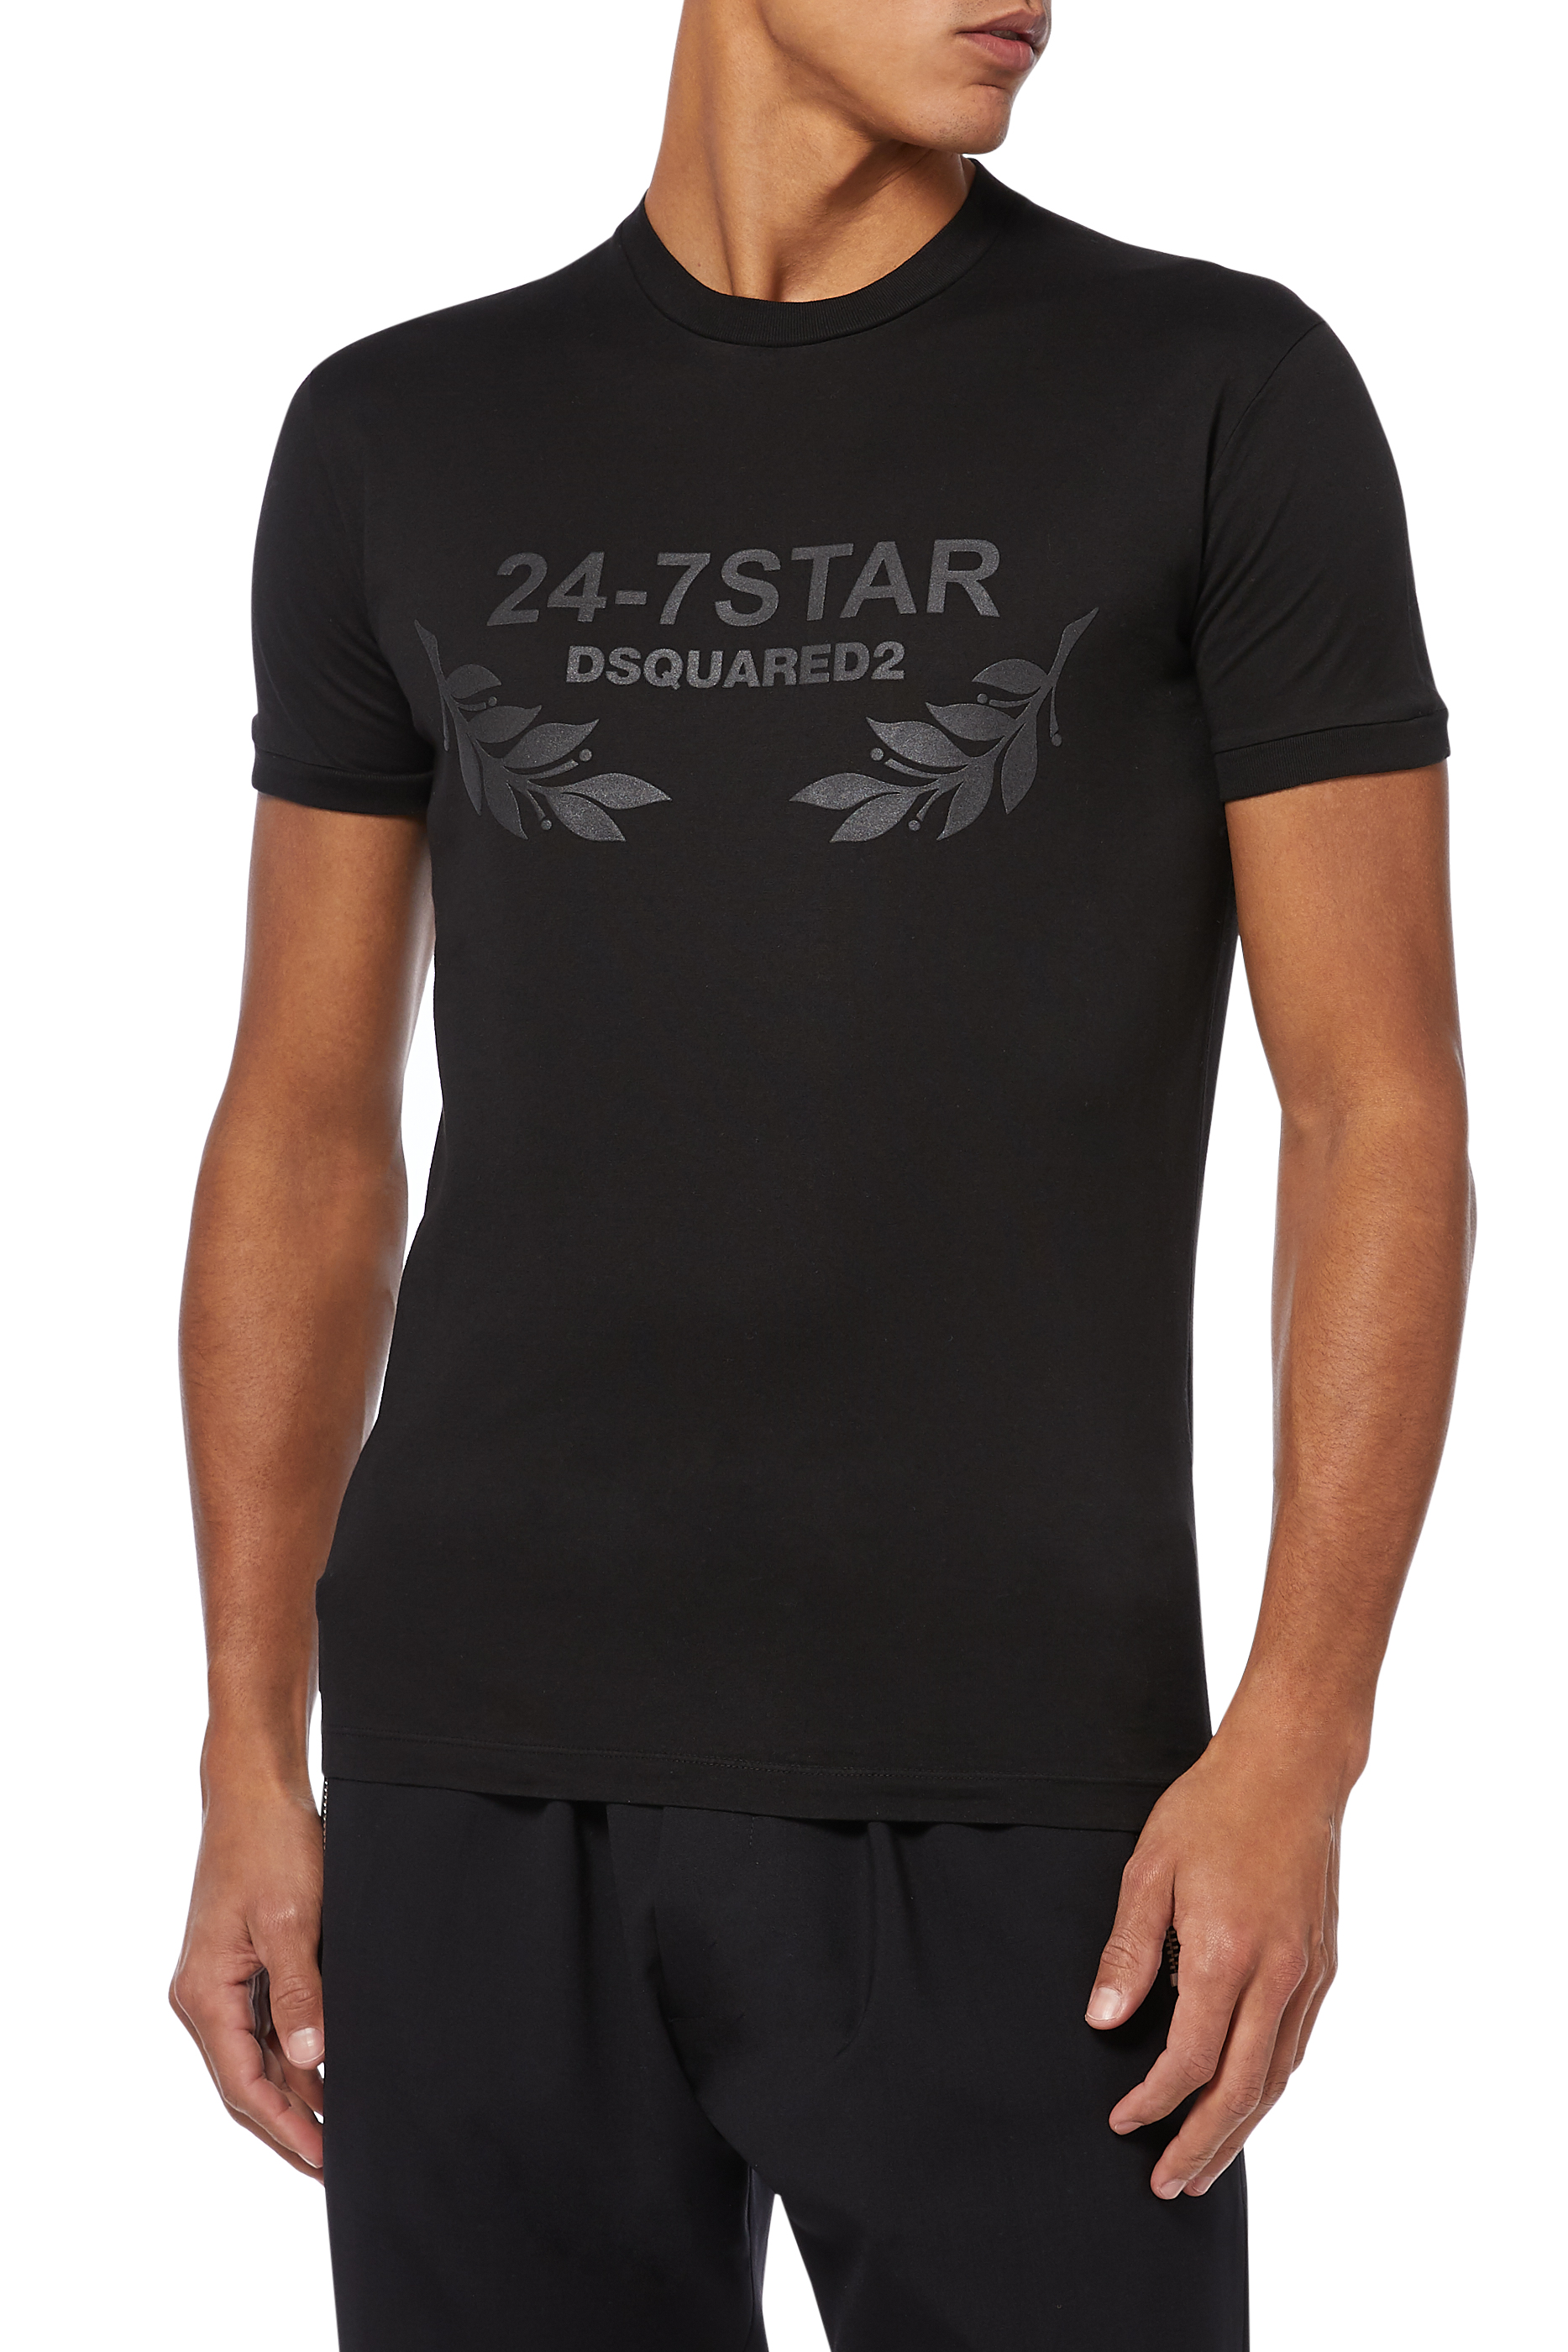 24 7 star dsquared t shirt